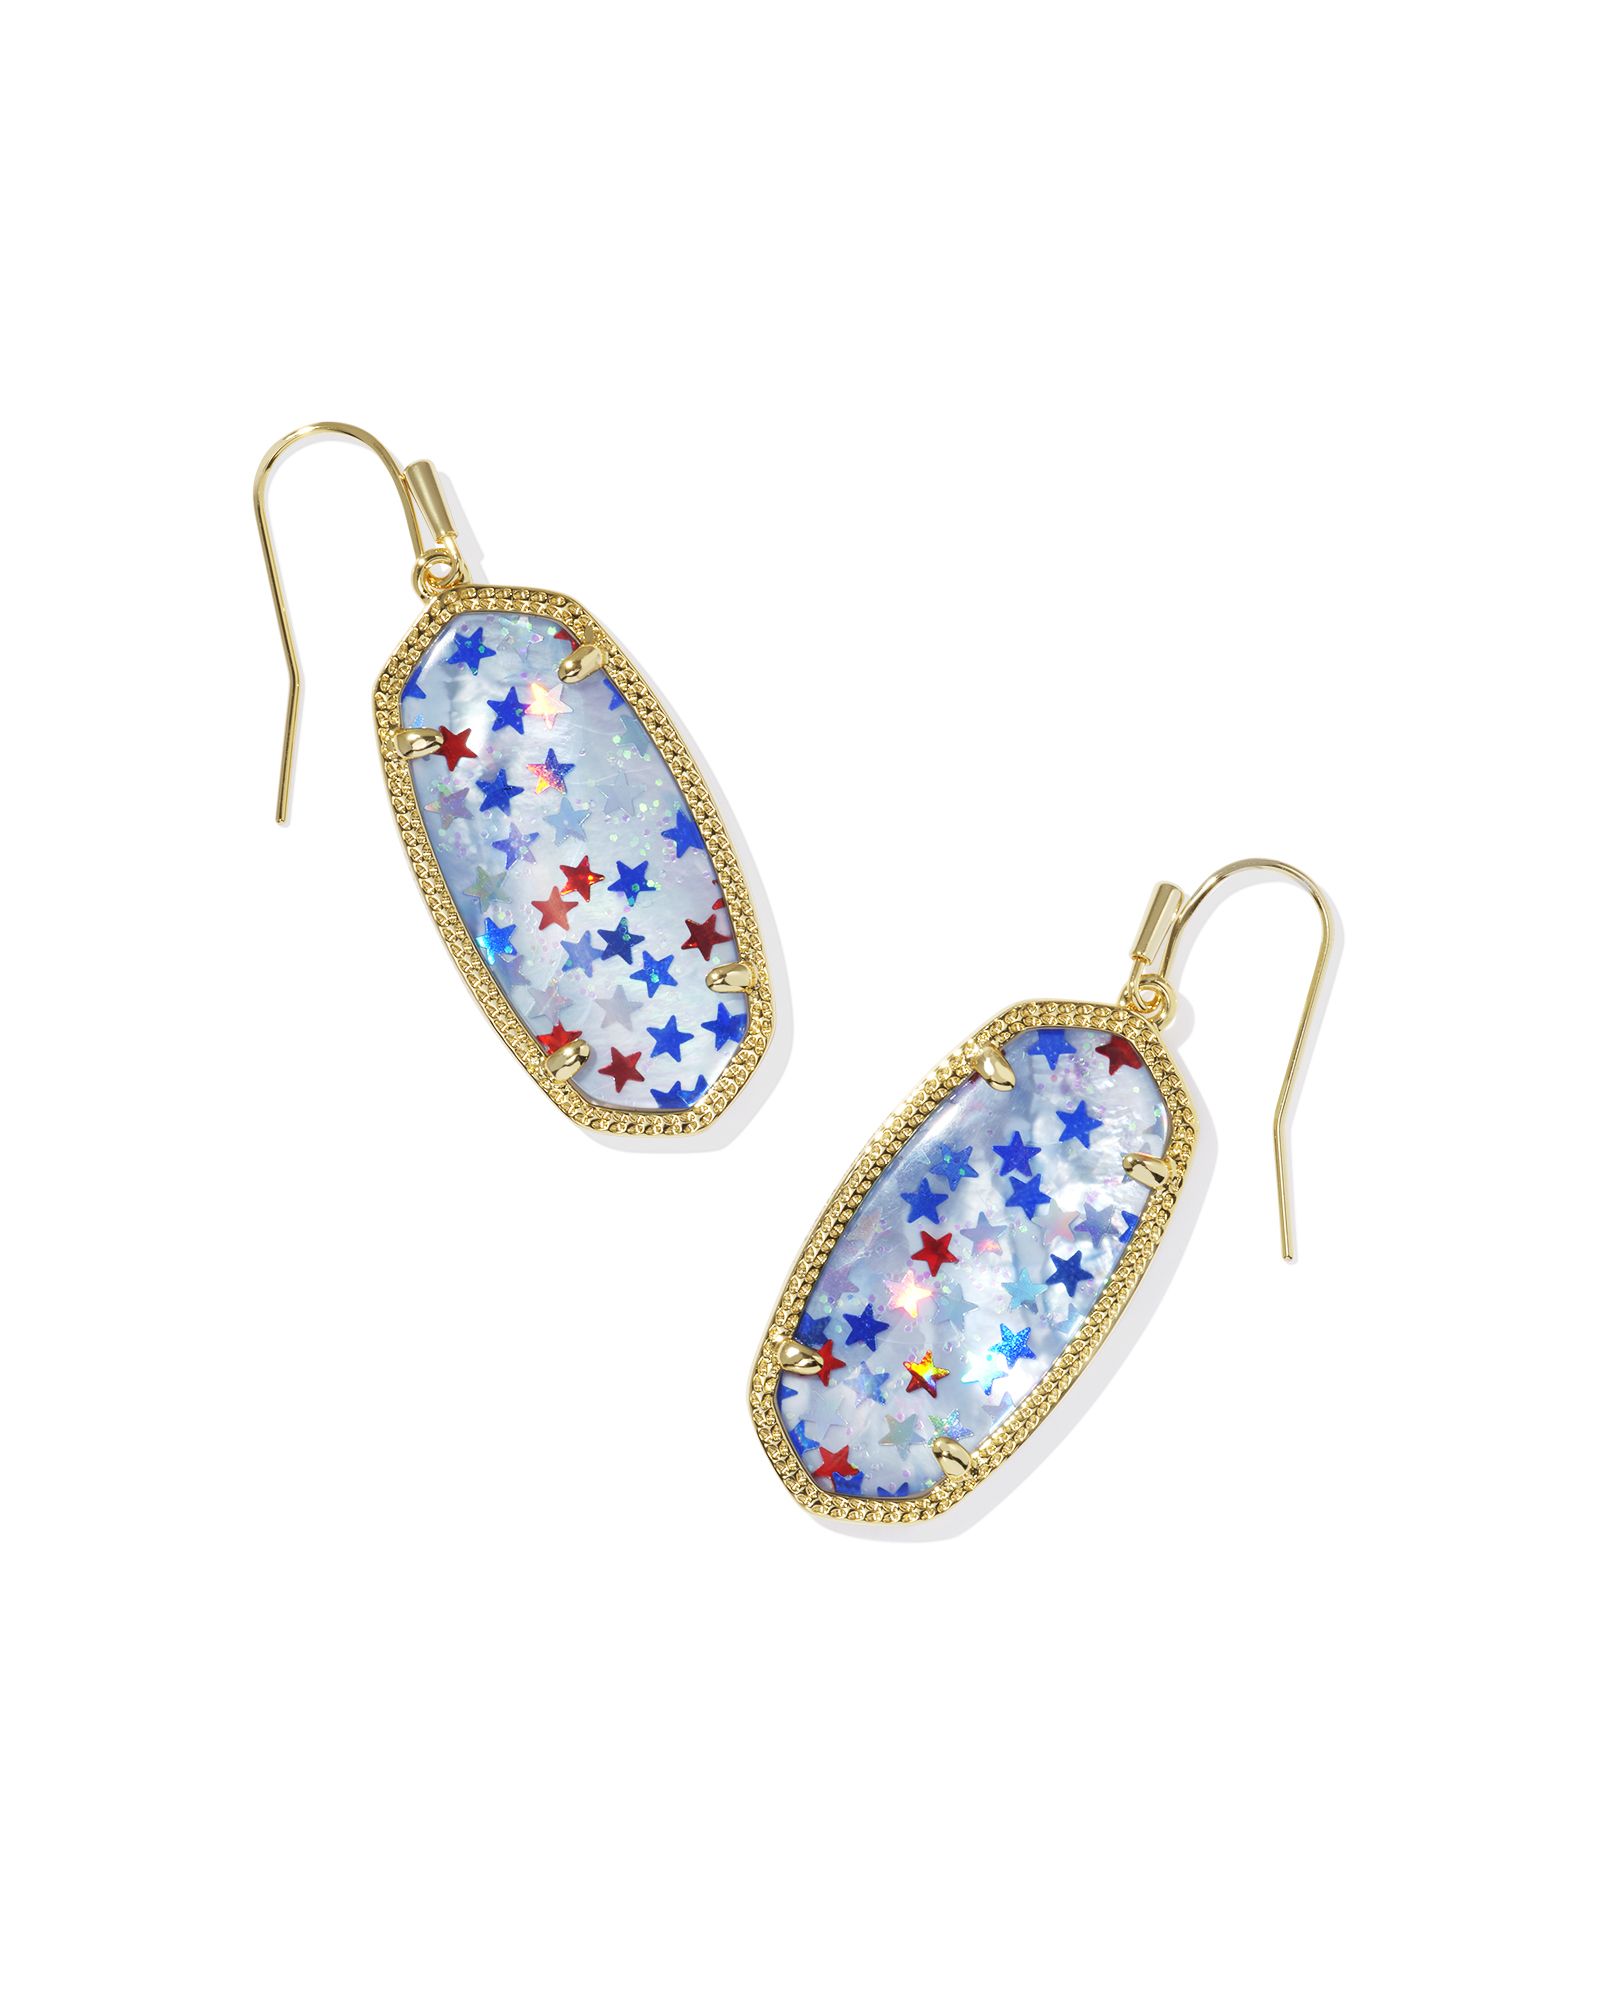 Elle Gold Drop Earrings in Red White Blue Illusion | Kendra Scott